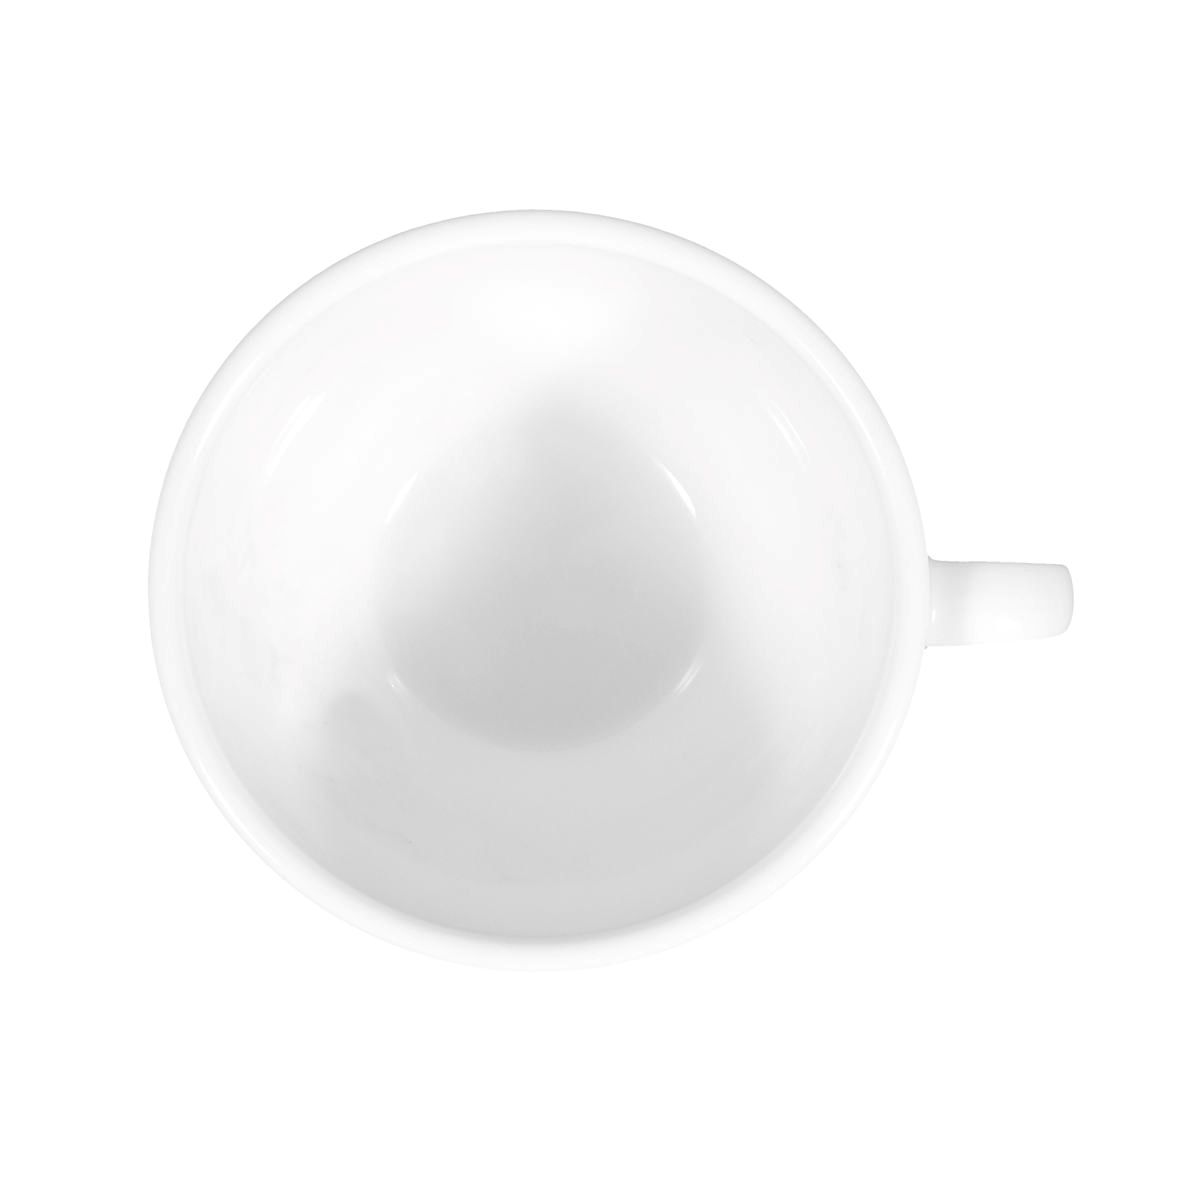 Kaffeetasse 1164 - Serie Meran